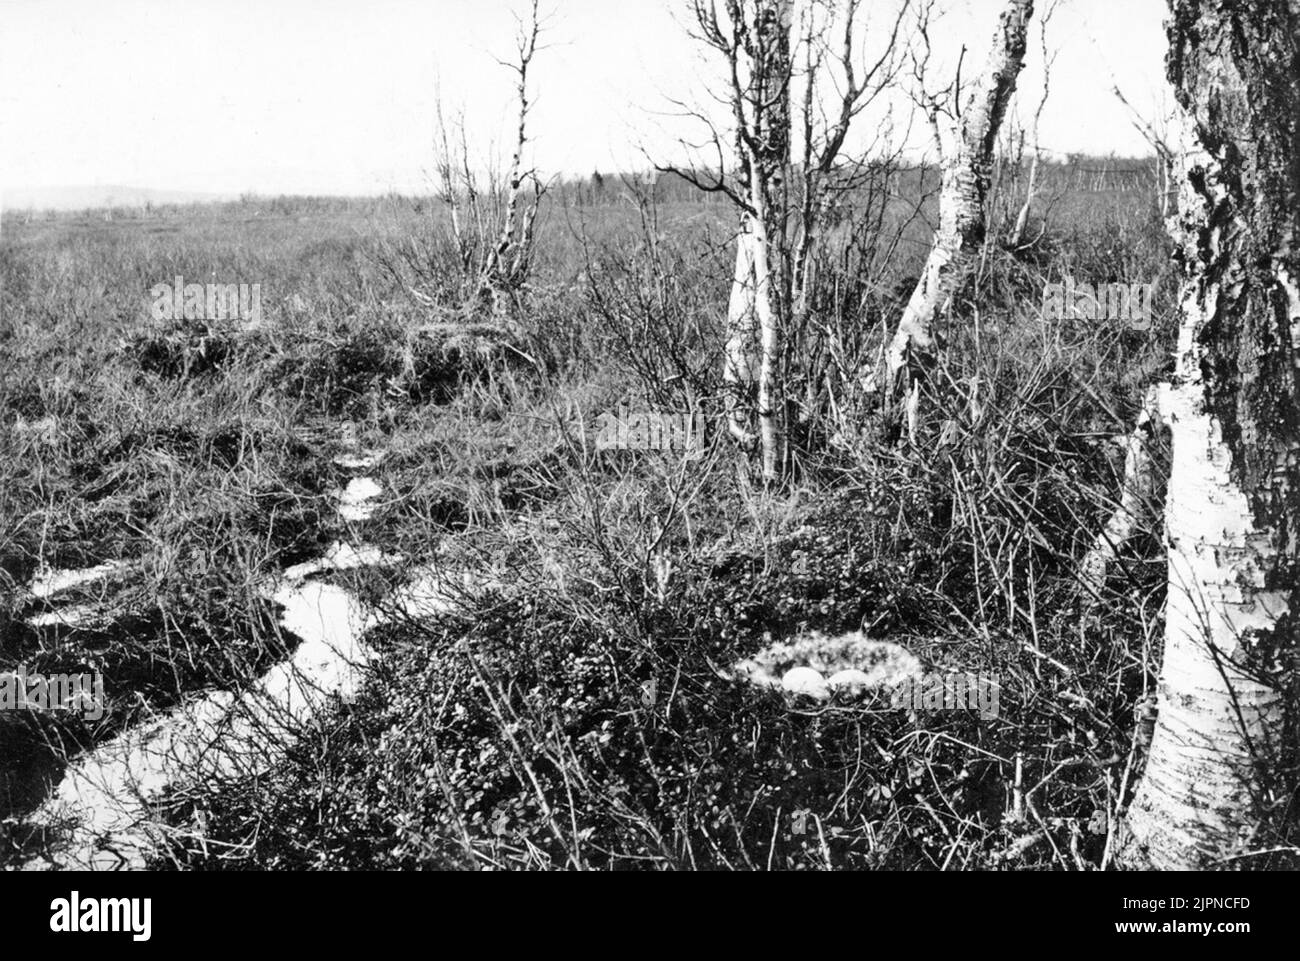 Aufenthalt von Sädgås (gilt als Fabalis) an der Grenze zwischen Open Tuvig MYR und dem Birkengürtel entlang Haubarjokk im nördlichen Teil von Sjaunga-Ape auf v. der Seite des Beckens etwa 1 km von seinem Ausfluss in Sjaumjaädno entfernt. Das Nest enthielt beim Photo-Event 6 halbe FRUF-Eier. 6. Mai 1927 (der Berg, der den weitesten Hintergrund erblickt, ist der Tjerrokotjen) Bo AV Sädgås (Anser Fabalis) Beläget på gränsen mellan öppen tuvig myr och björkbältet längs Haubarjokk i norra delen AV Sjaunga-APE på v. sidan AV bäcken c:a 1 km från dess utflöde i Sjanno. BOET innehöll vid foto-tillfället 6 h Stockfoto